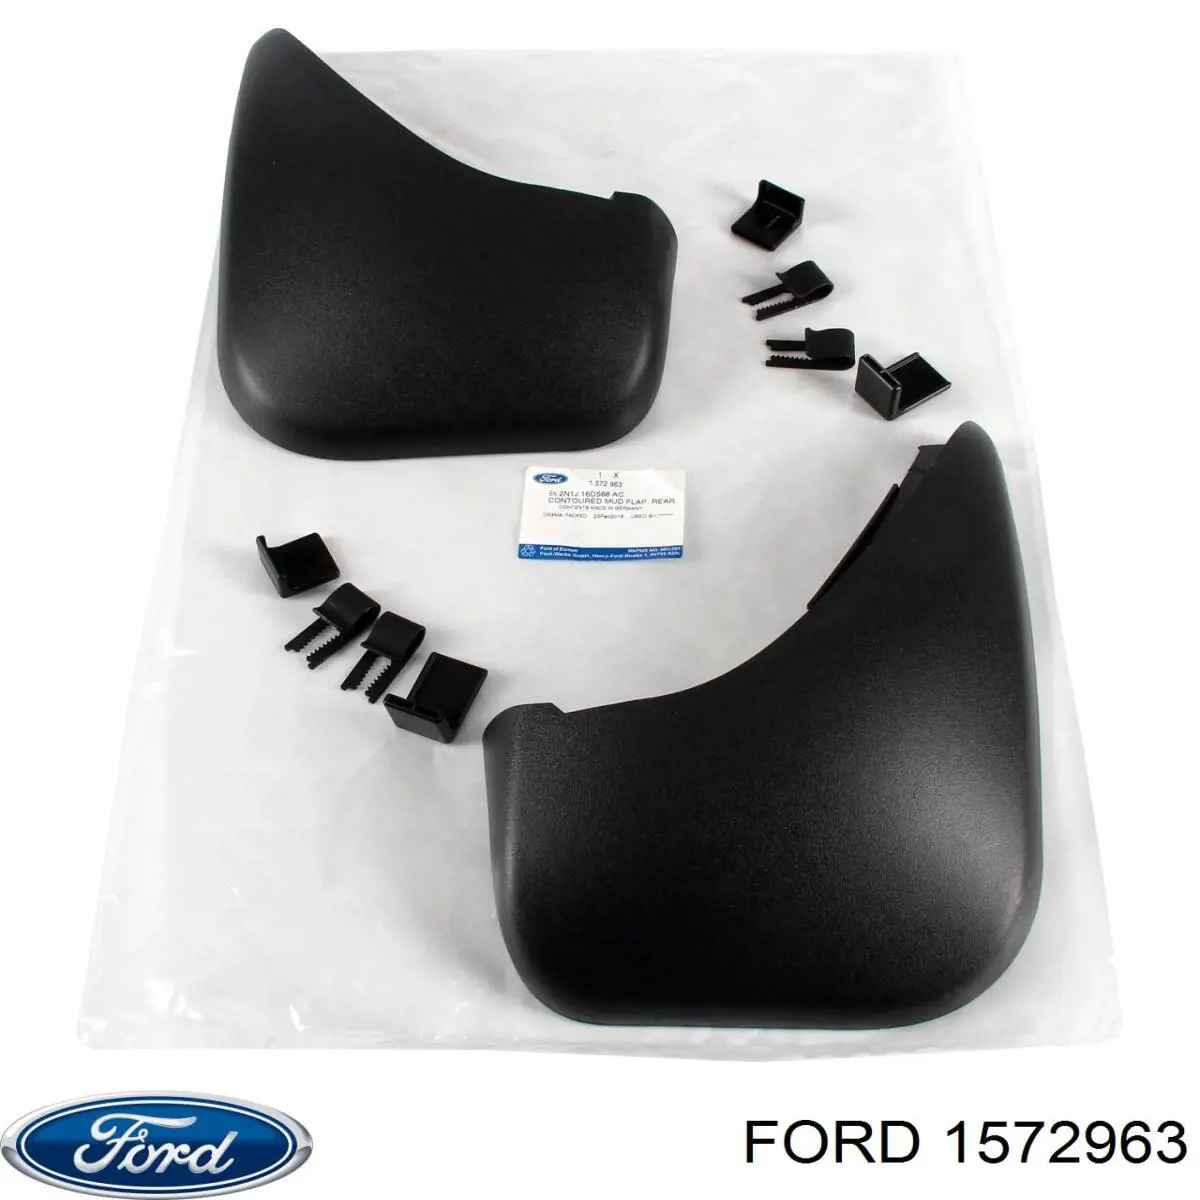 1572963 Ford брызговики задние, комплект